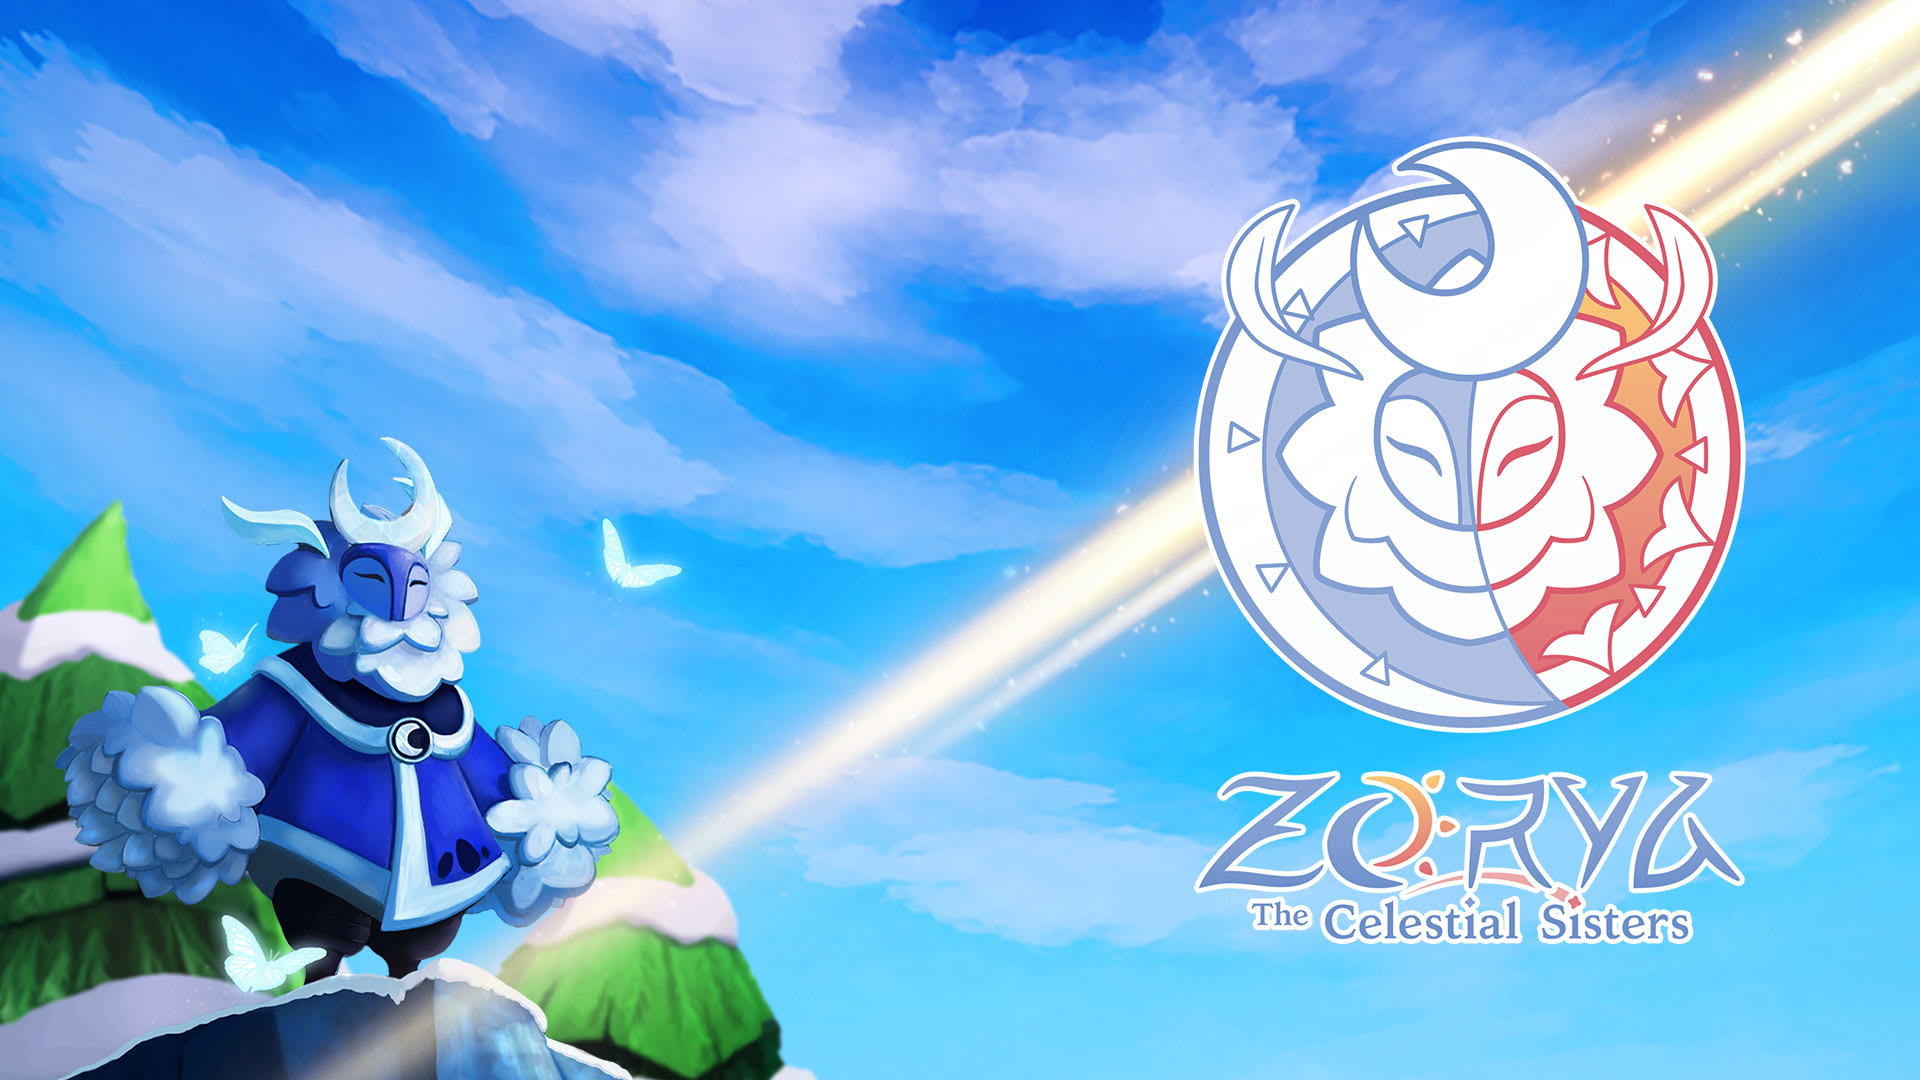 Zorya: The Celestial Sisters ™